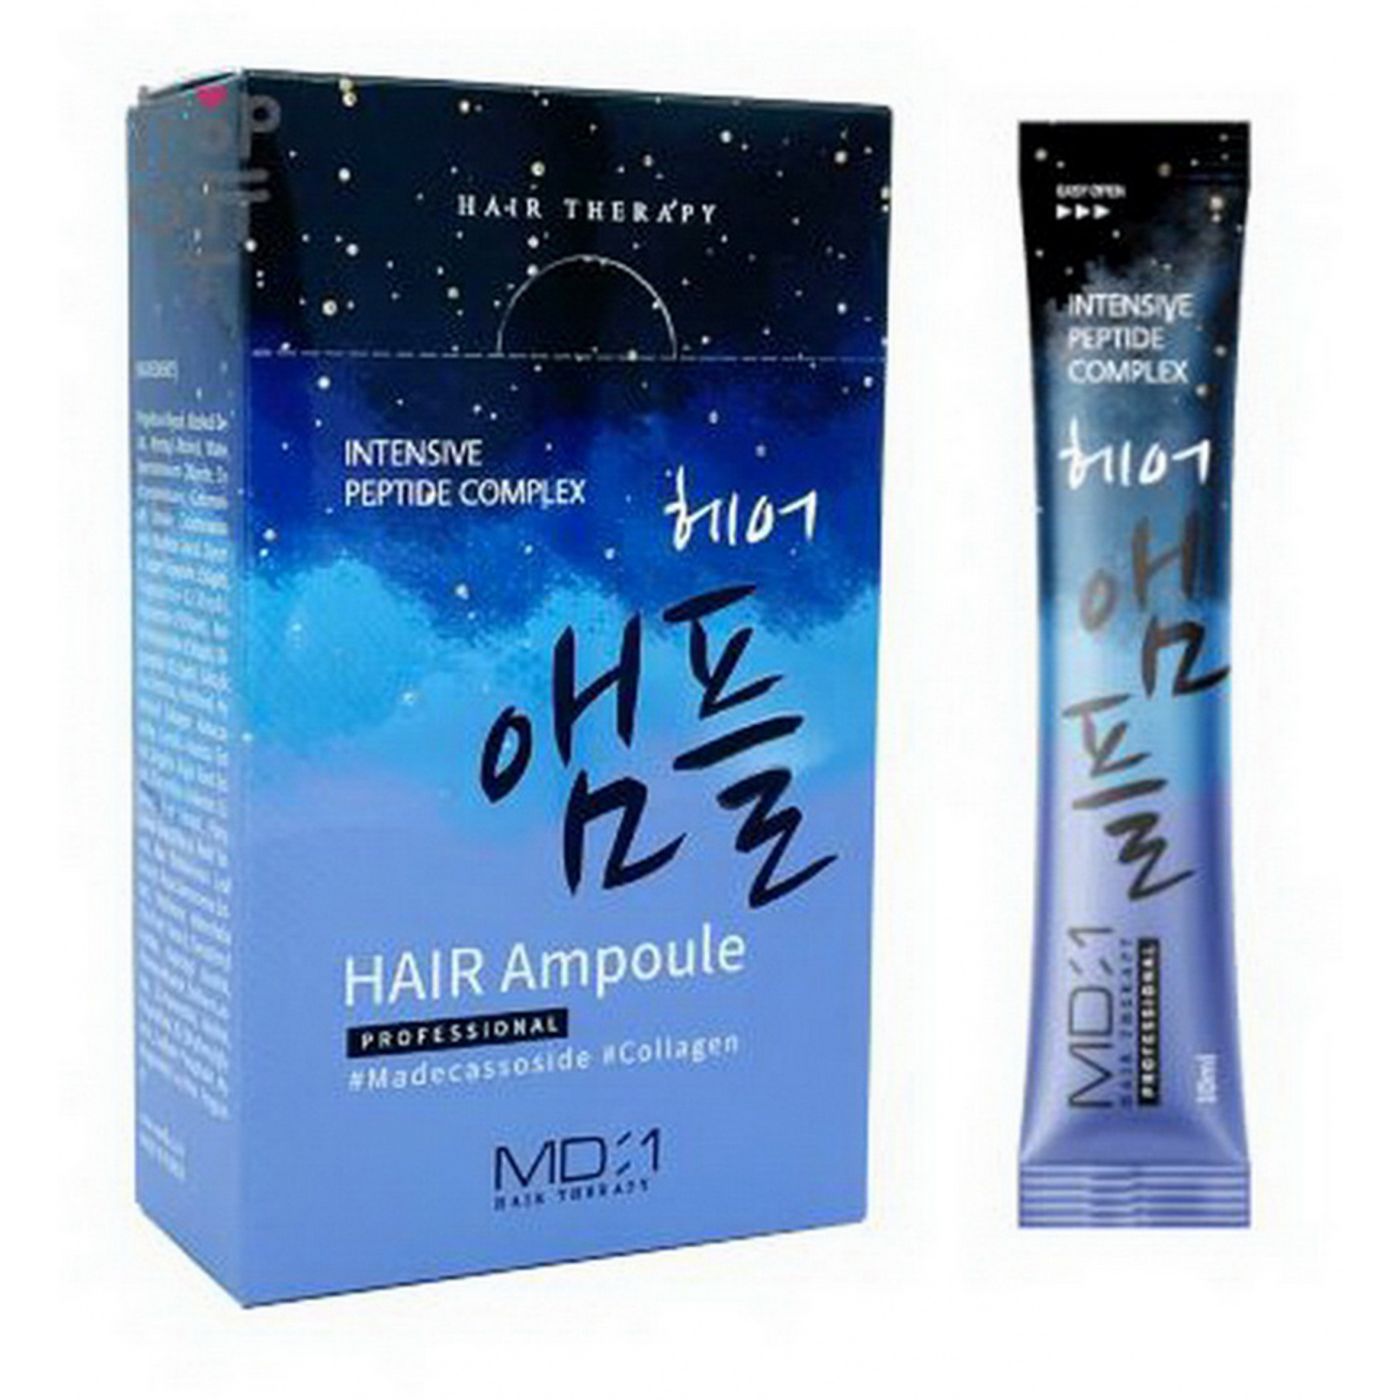 Филлер для волос MD:1 Intensive Peptide Complex Hair Ampoule, с пептидным комплексом, 10 мл - фото 2